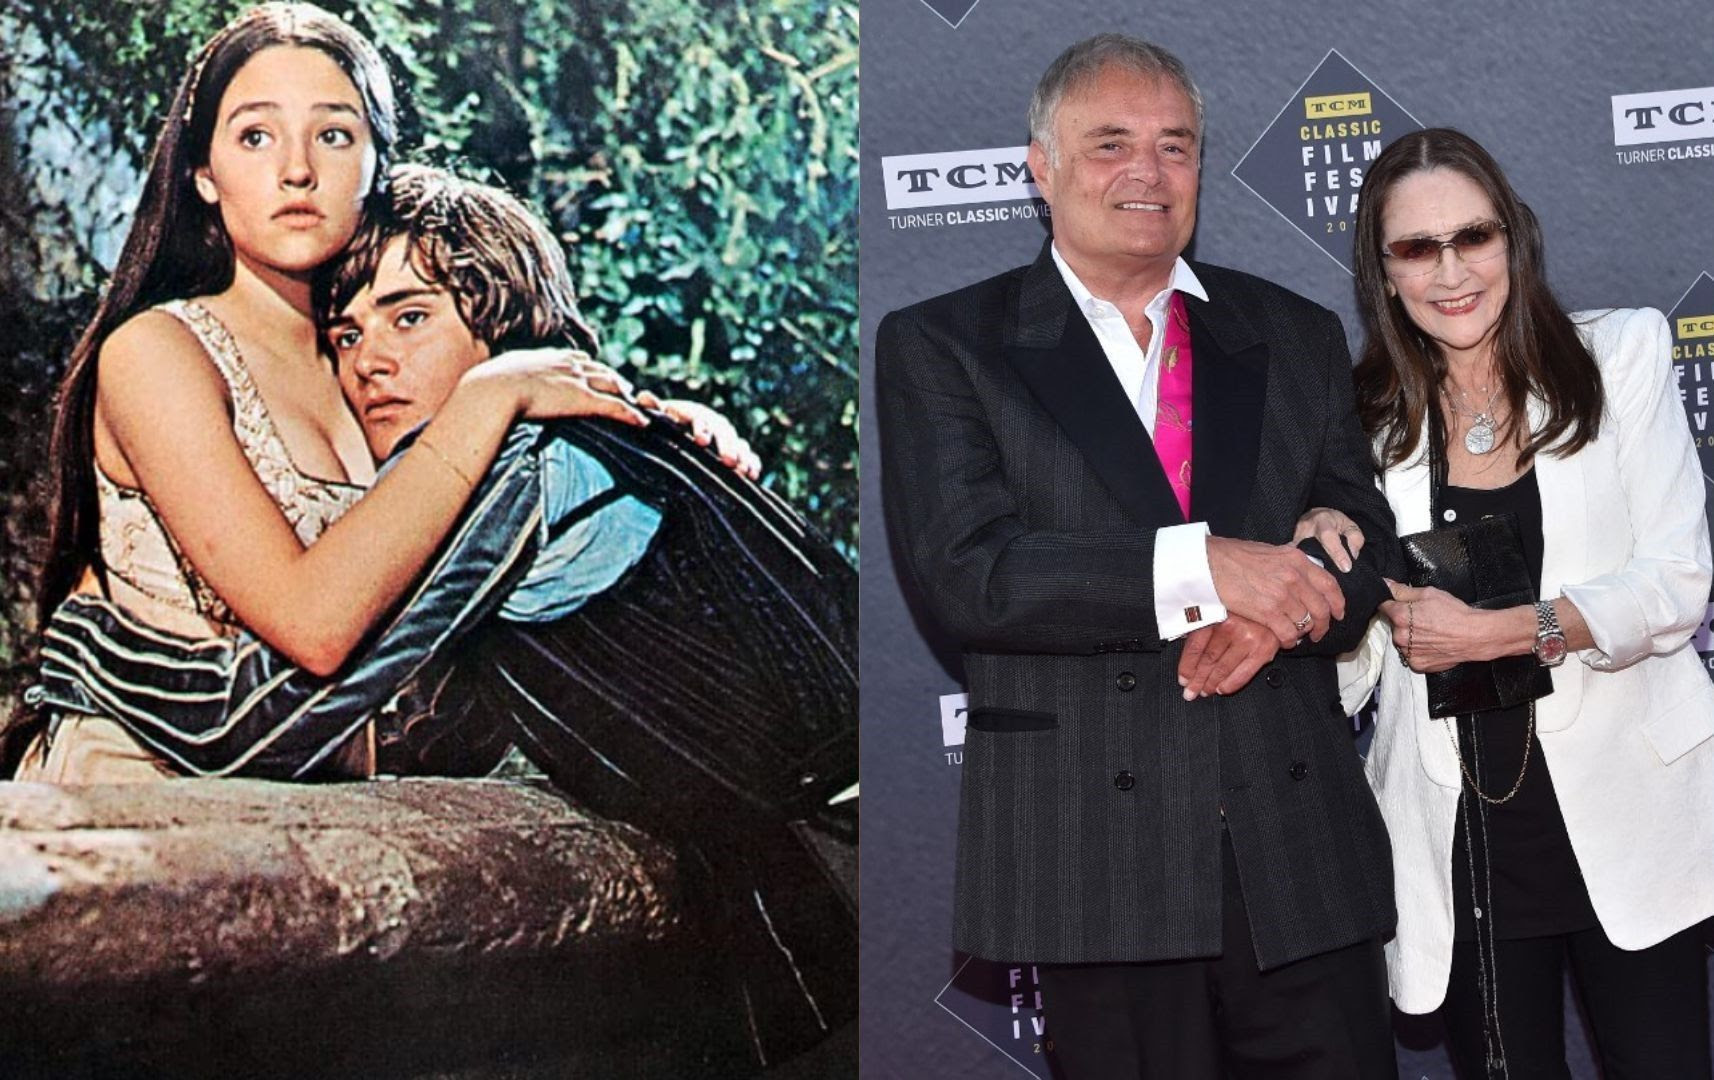 'Romeo and Juliet' child actors sue over 1968 nude scene